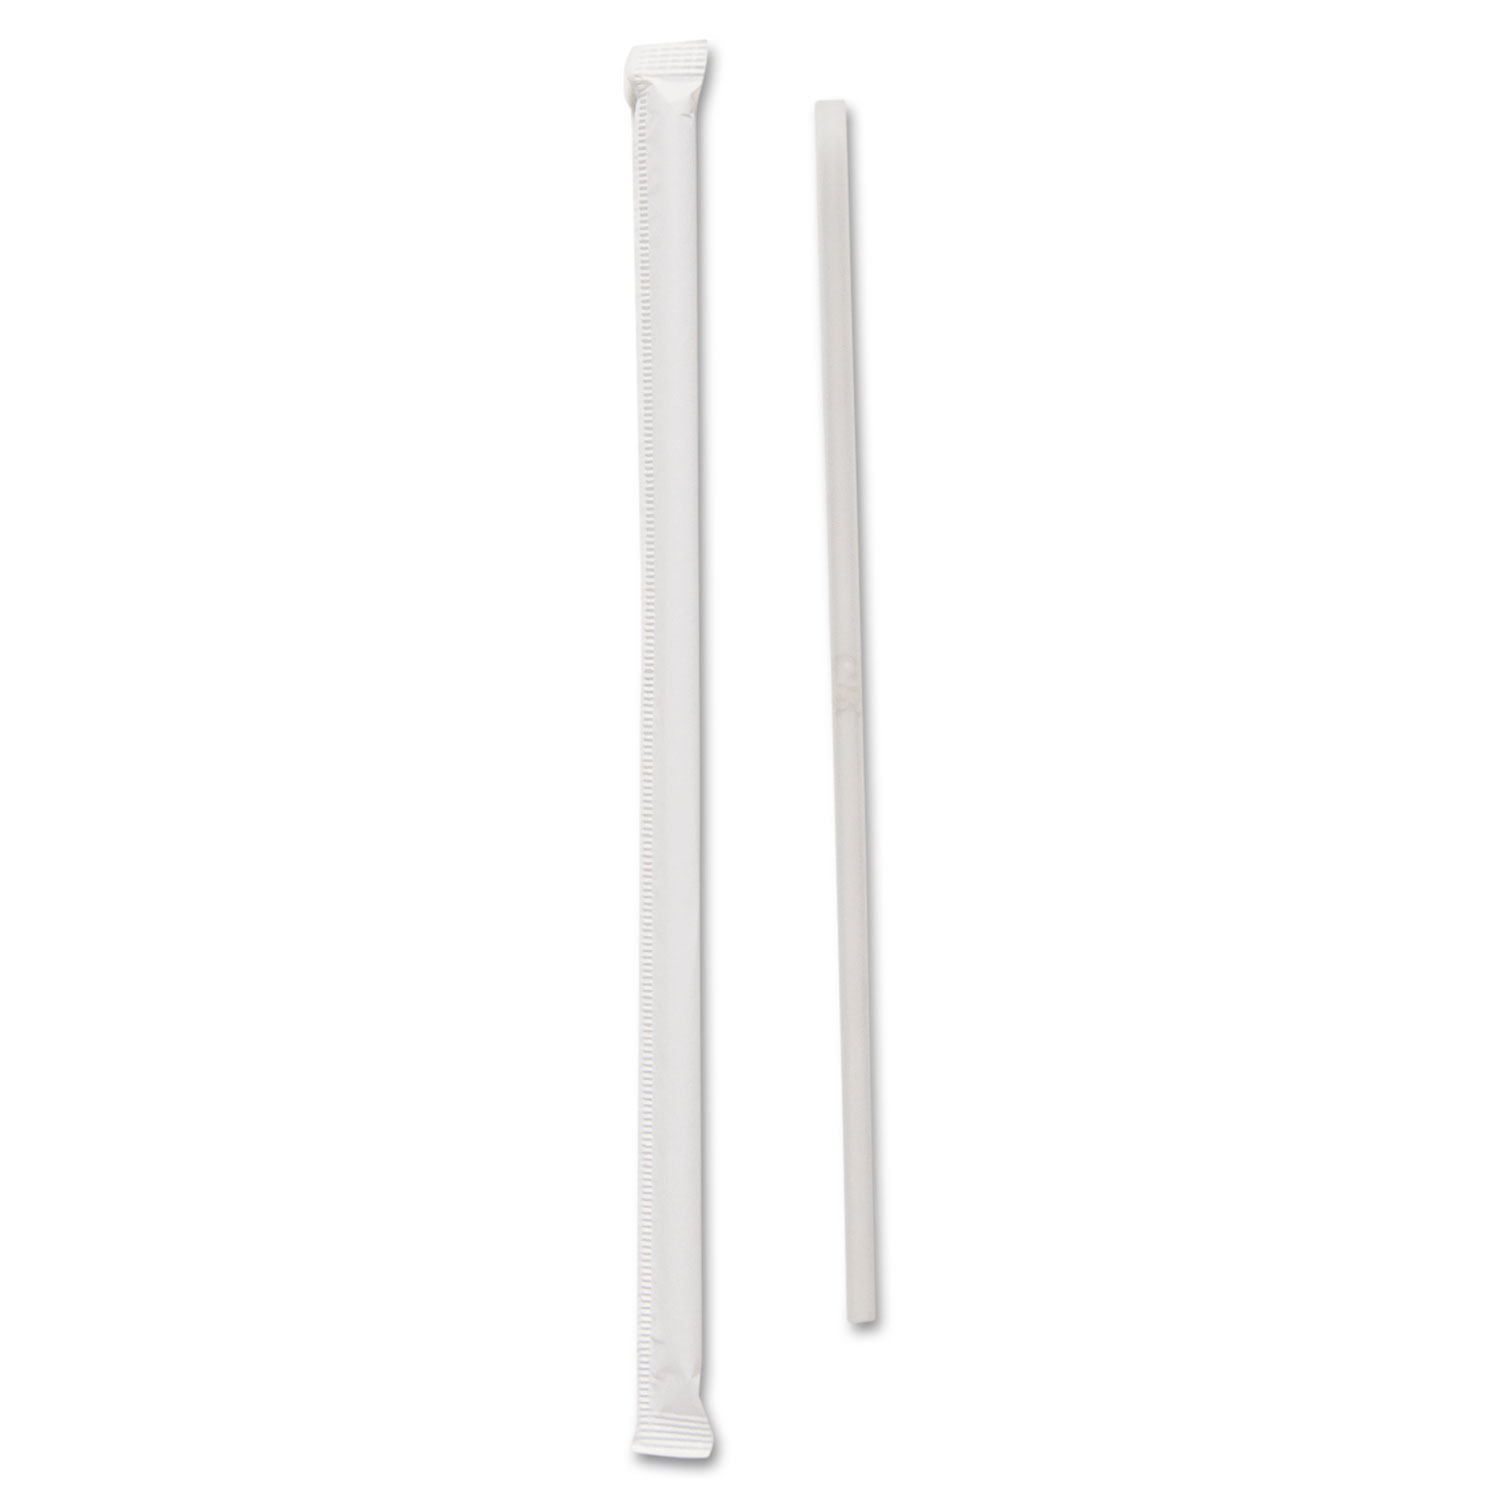 Wrapped Jumbo Straws, Polypropylene, 7 3/4 Long, Translucent, 500/Pack